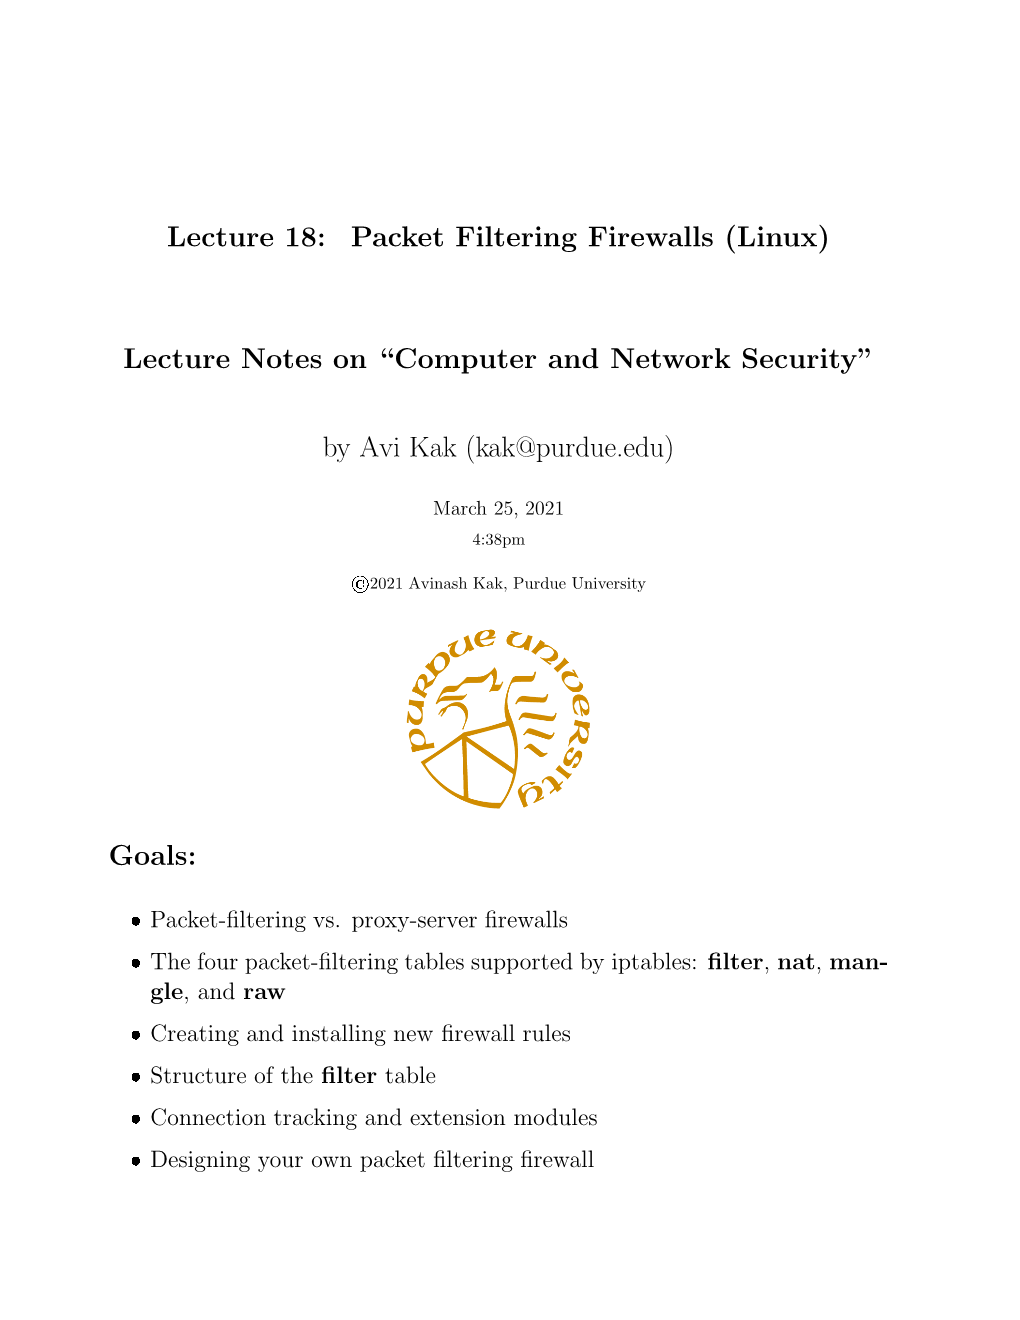 Packet Filtering Firewalls (Linux)